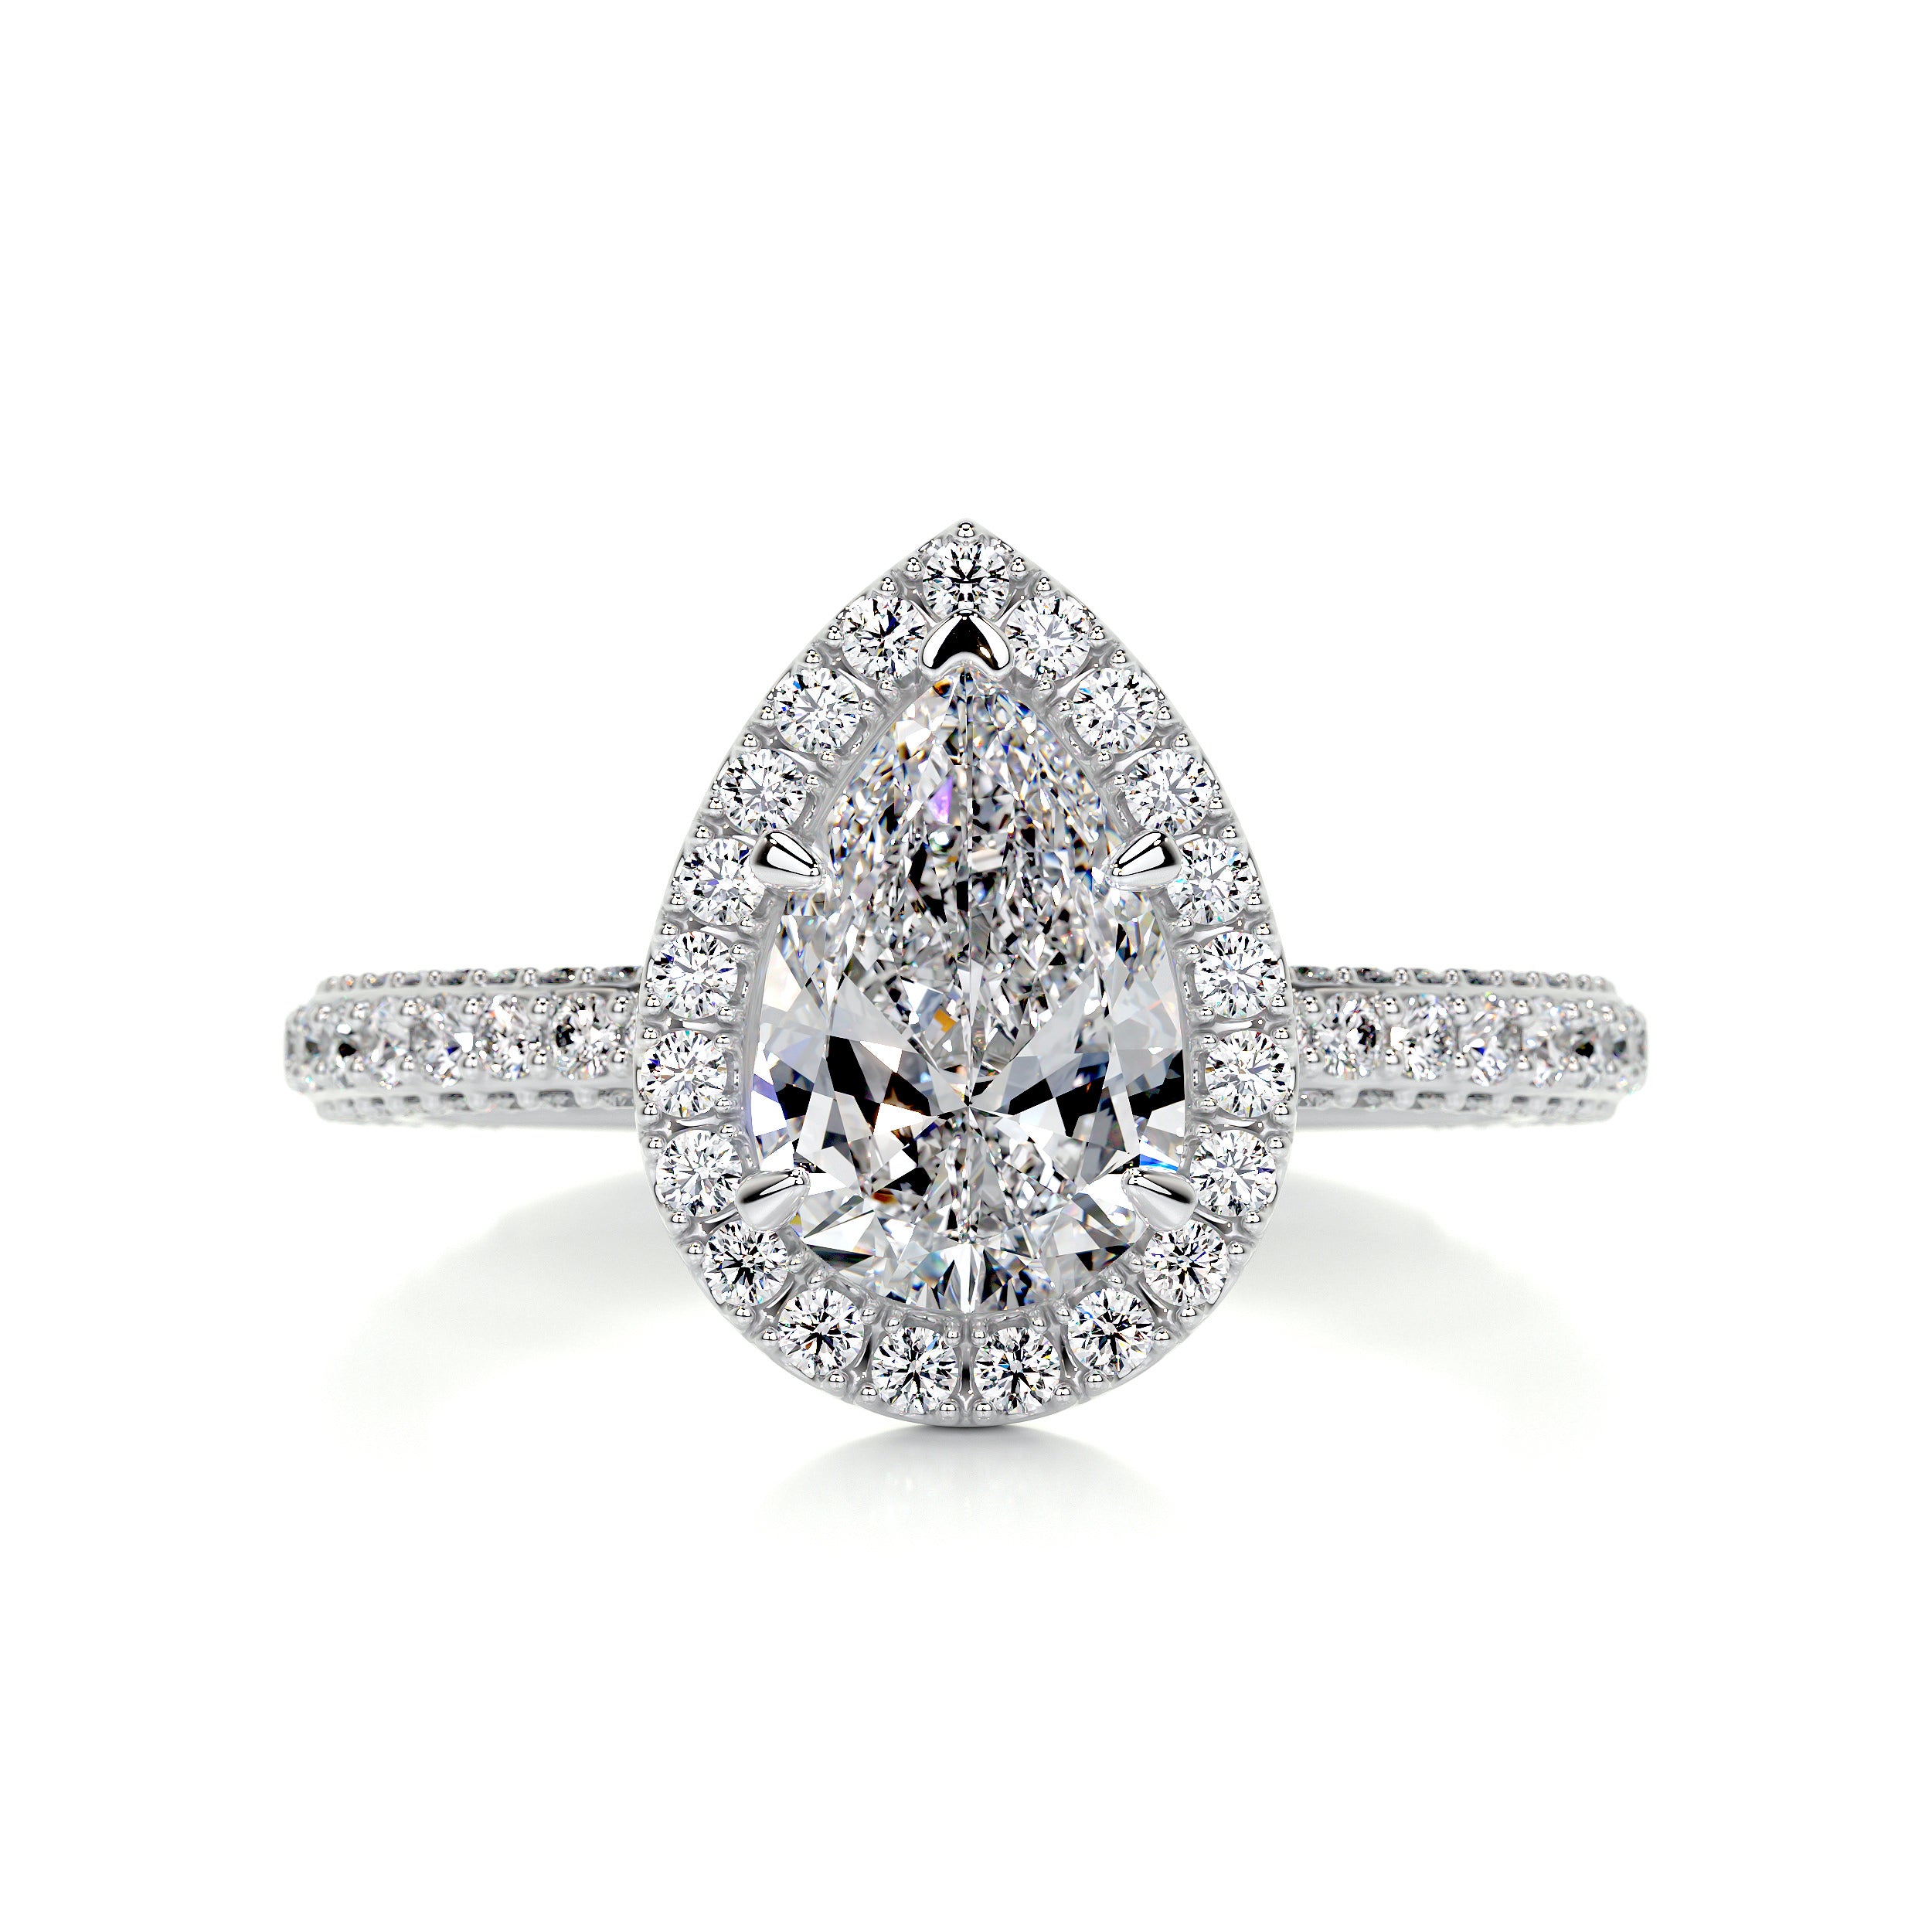 Beverly Diamond Engagement Ring   (2.5 Carat) -18K White Gold